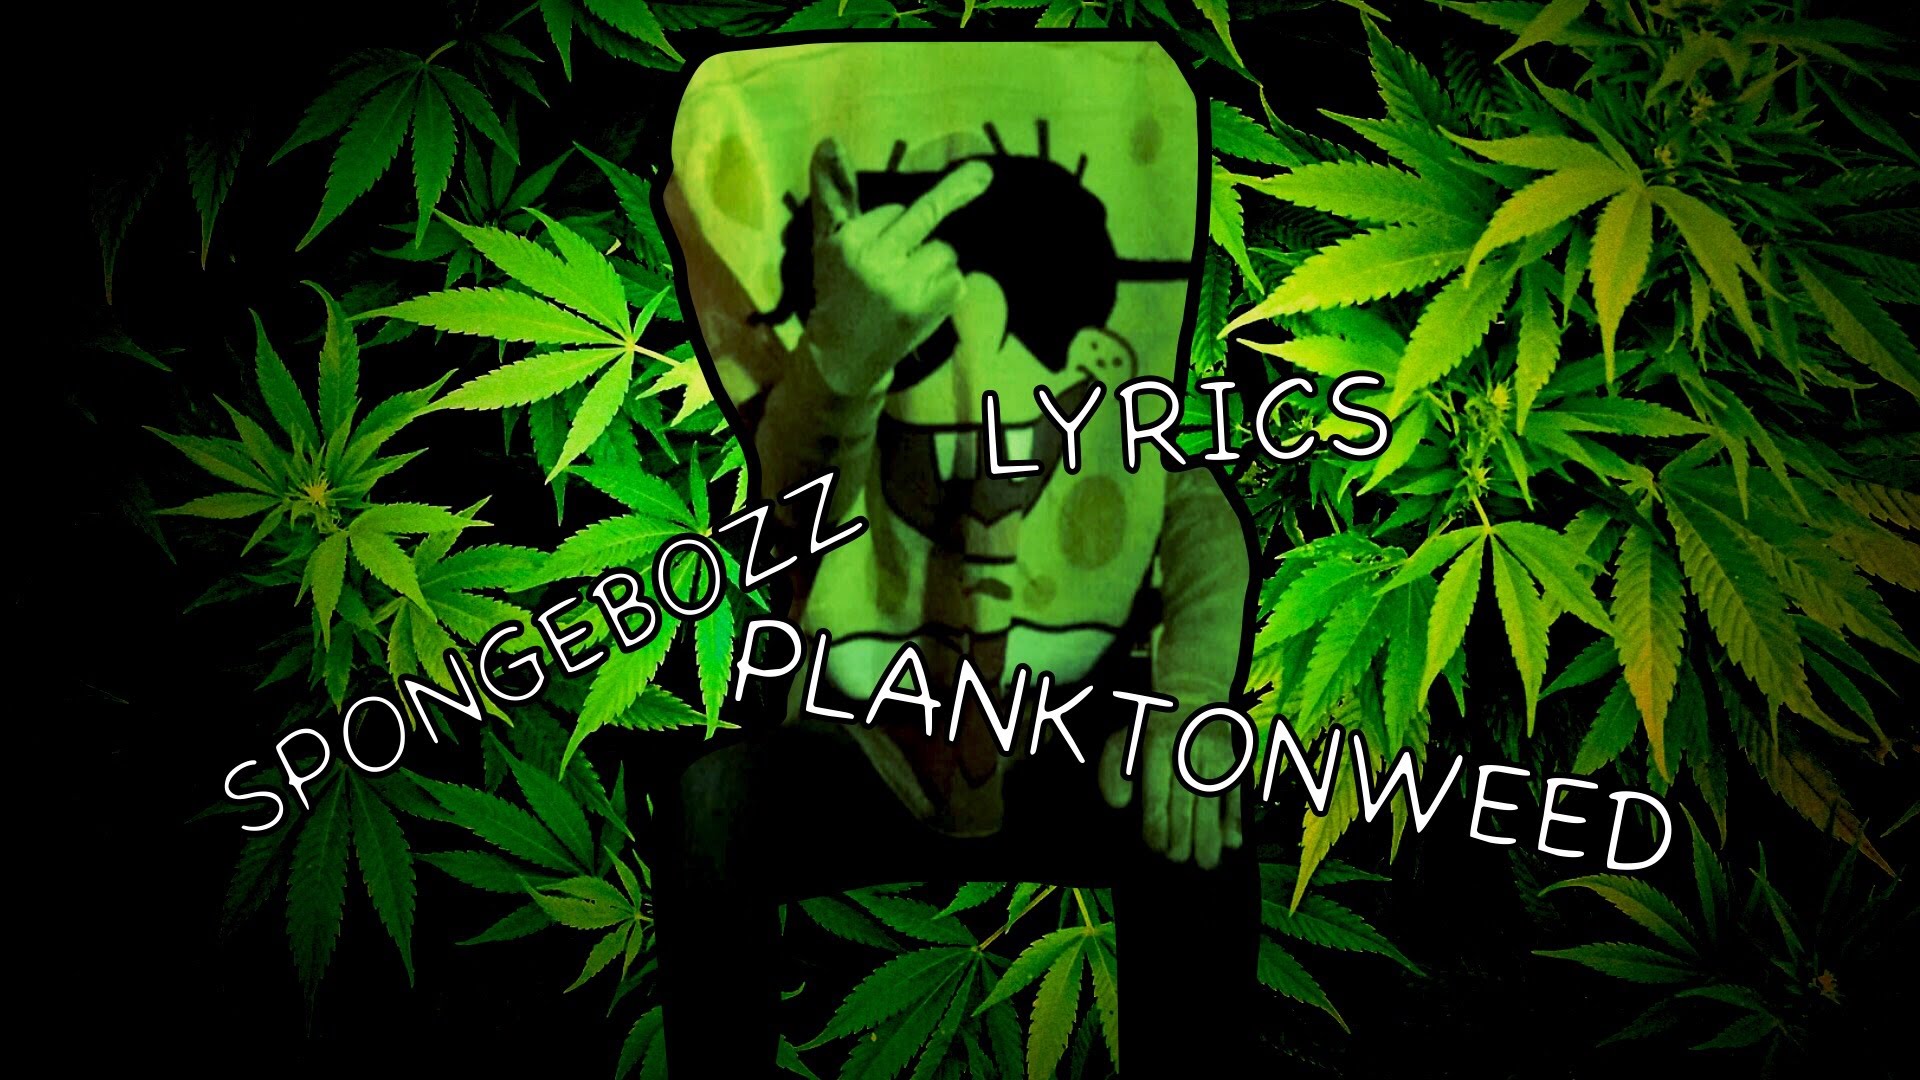 Spongebozz Planktonweed Lyrics